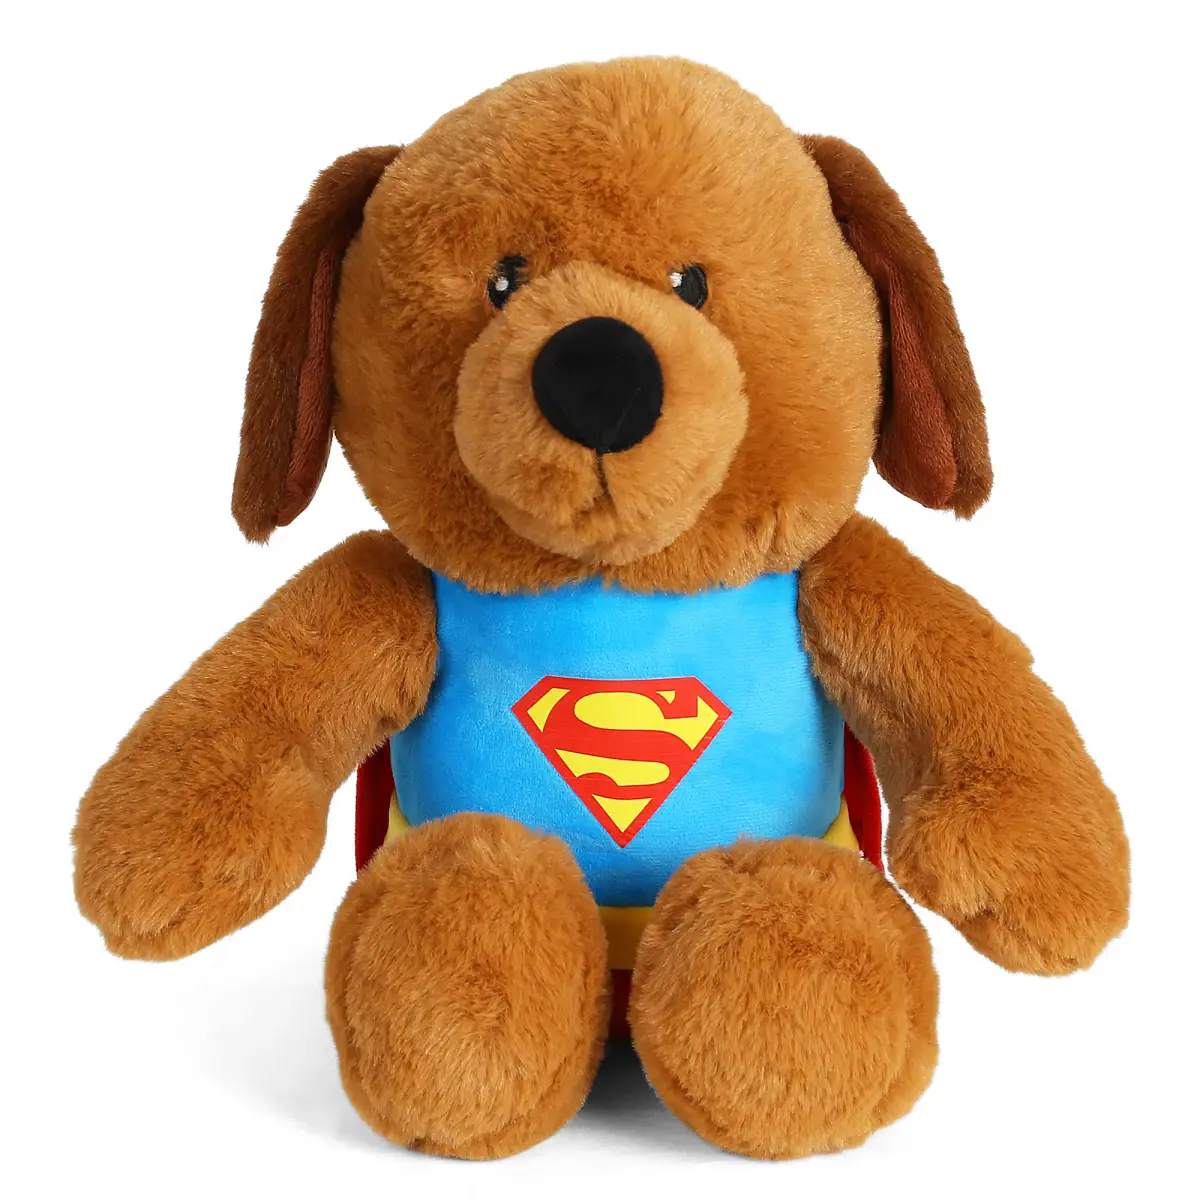 Mirada Superman Brown Bear, Soft Toys for Kids, 30cm, 3Y+, Brown